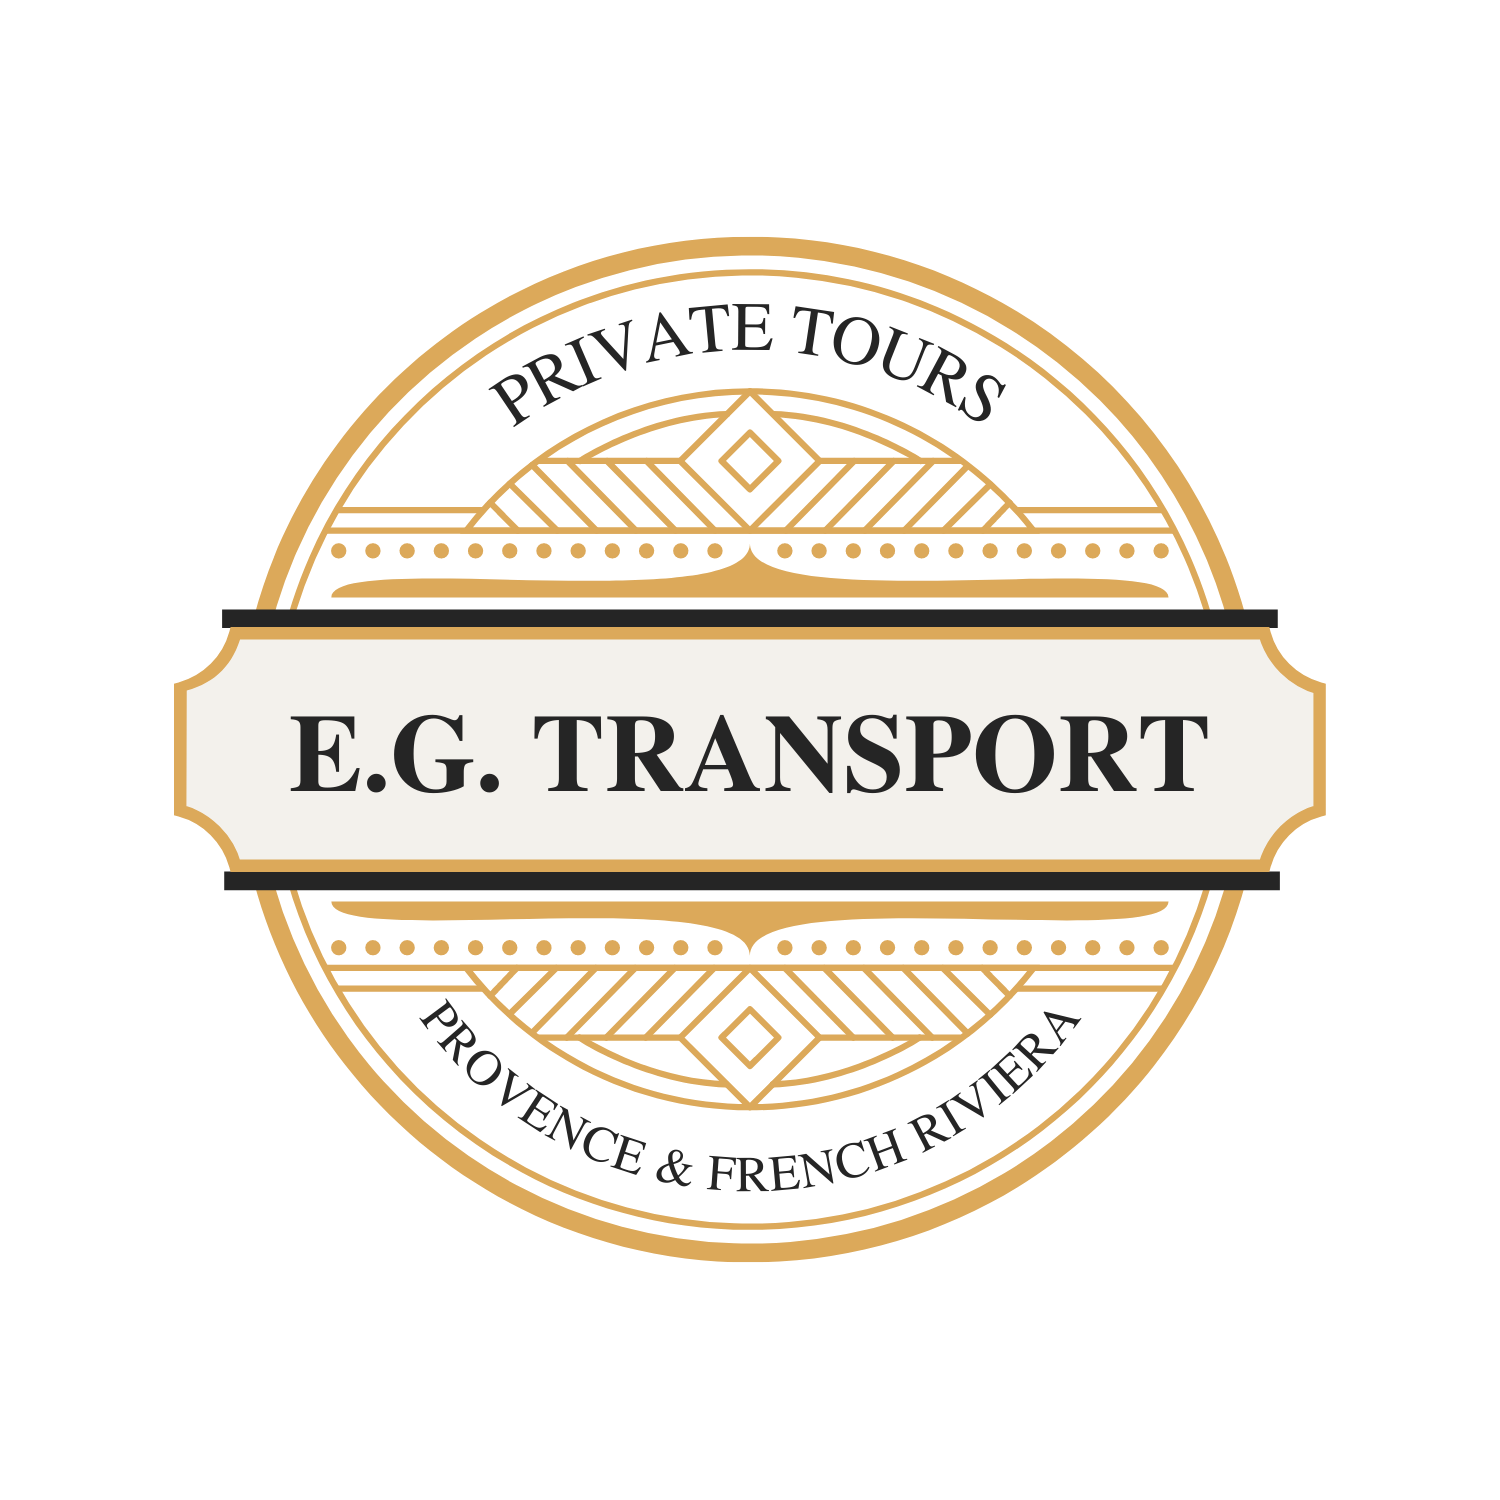 E.G. TRANSPORT &amp; PRIVATE TOURS